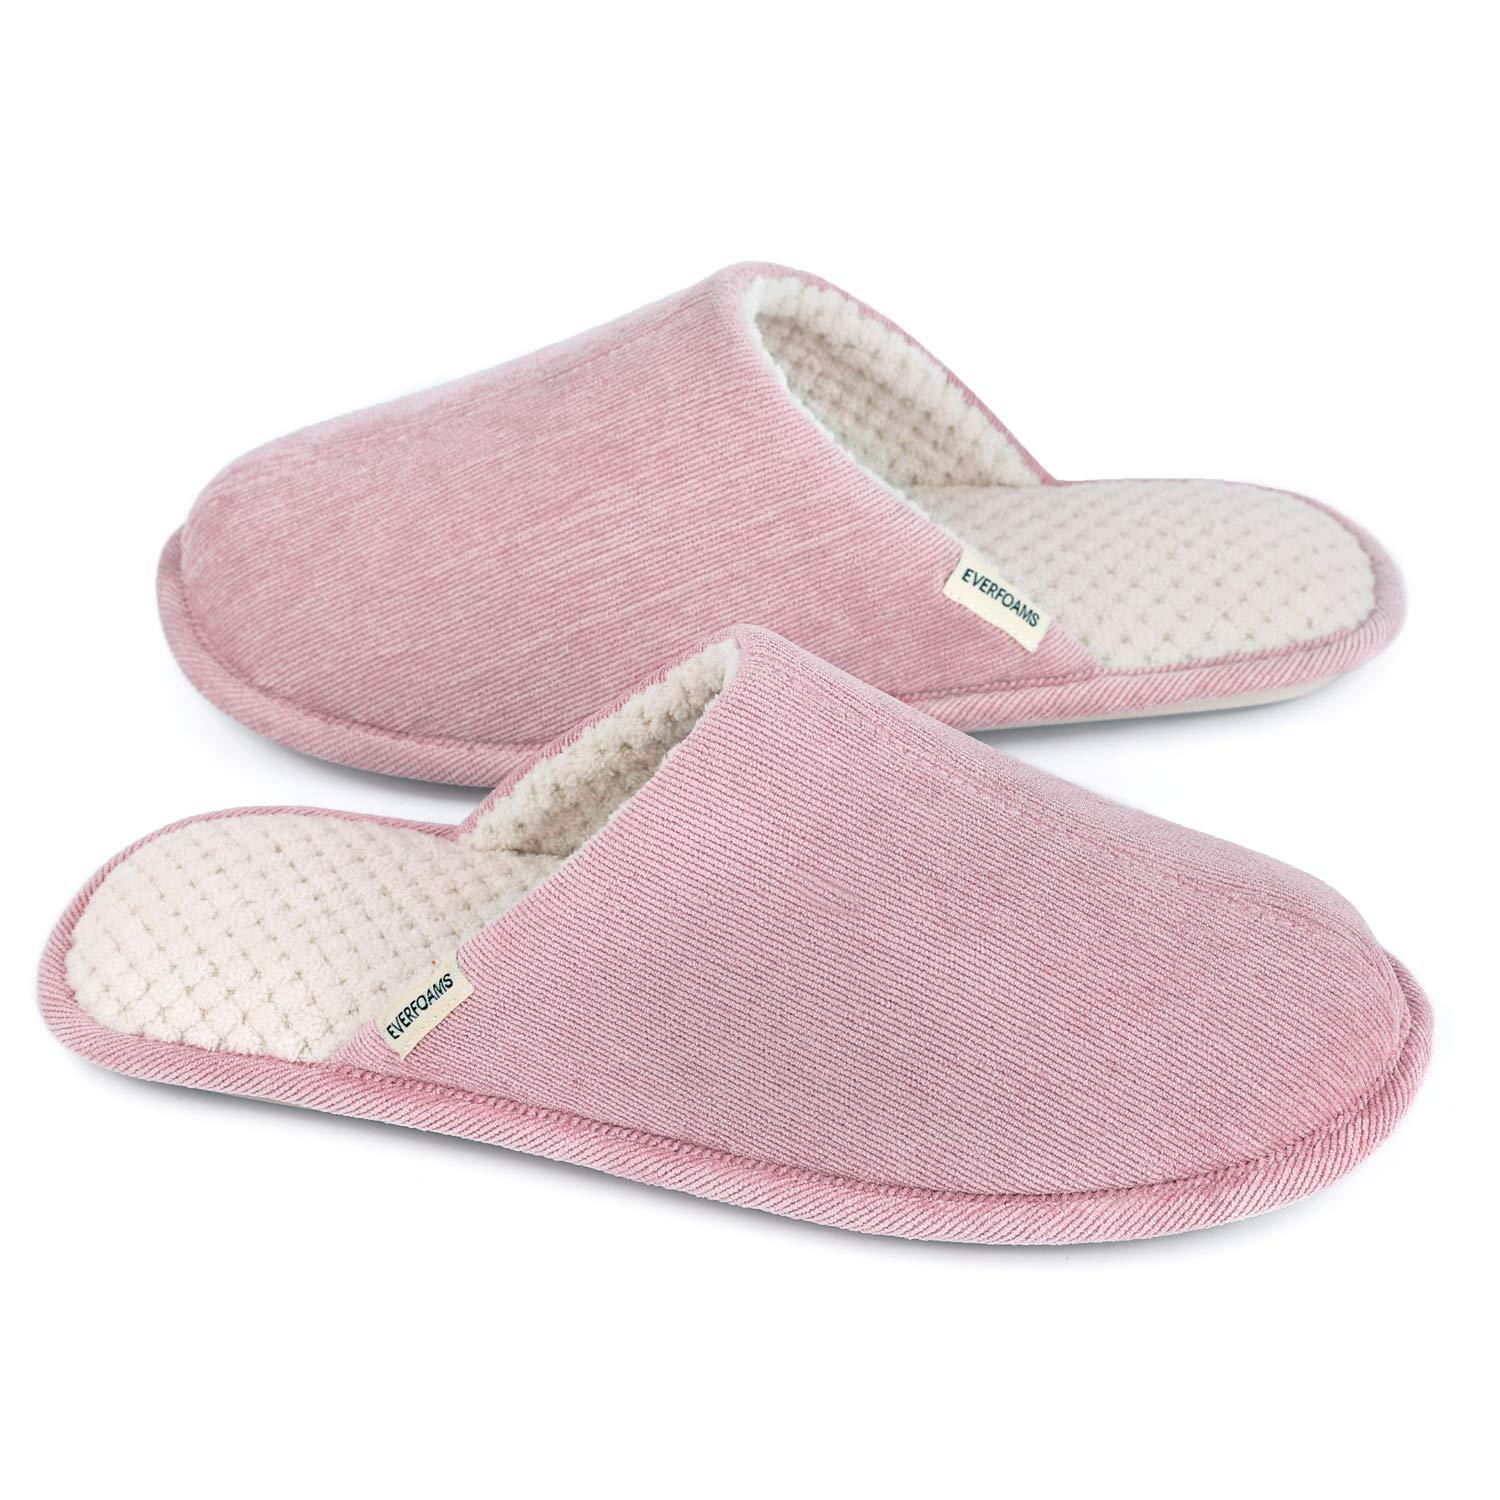 everfoams slippers